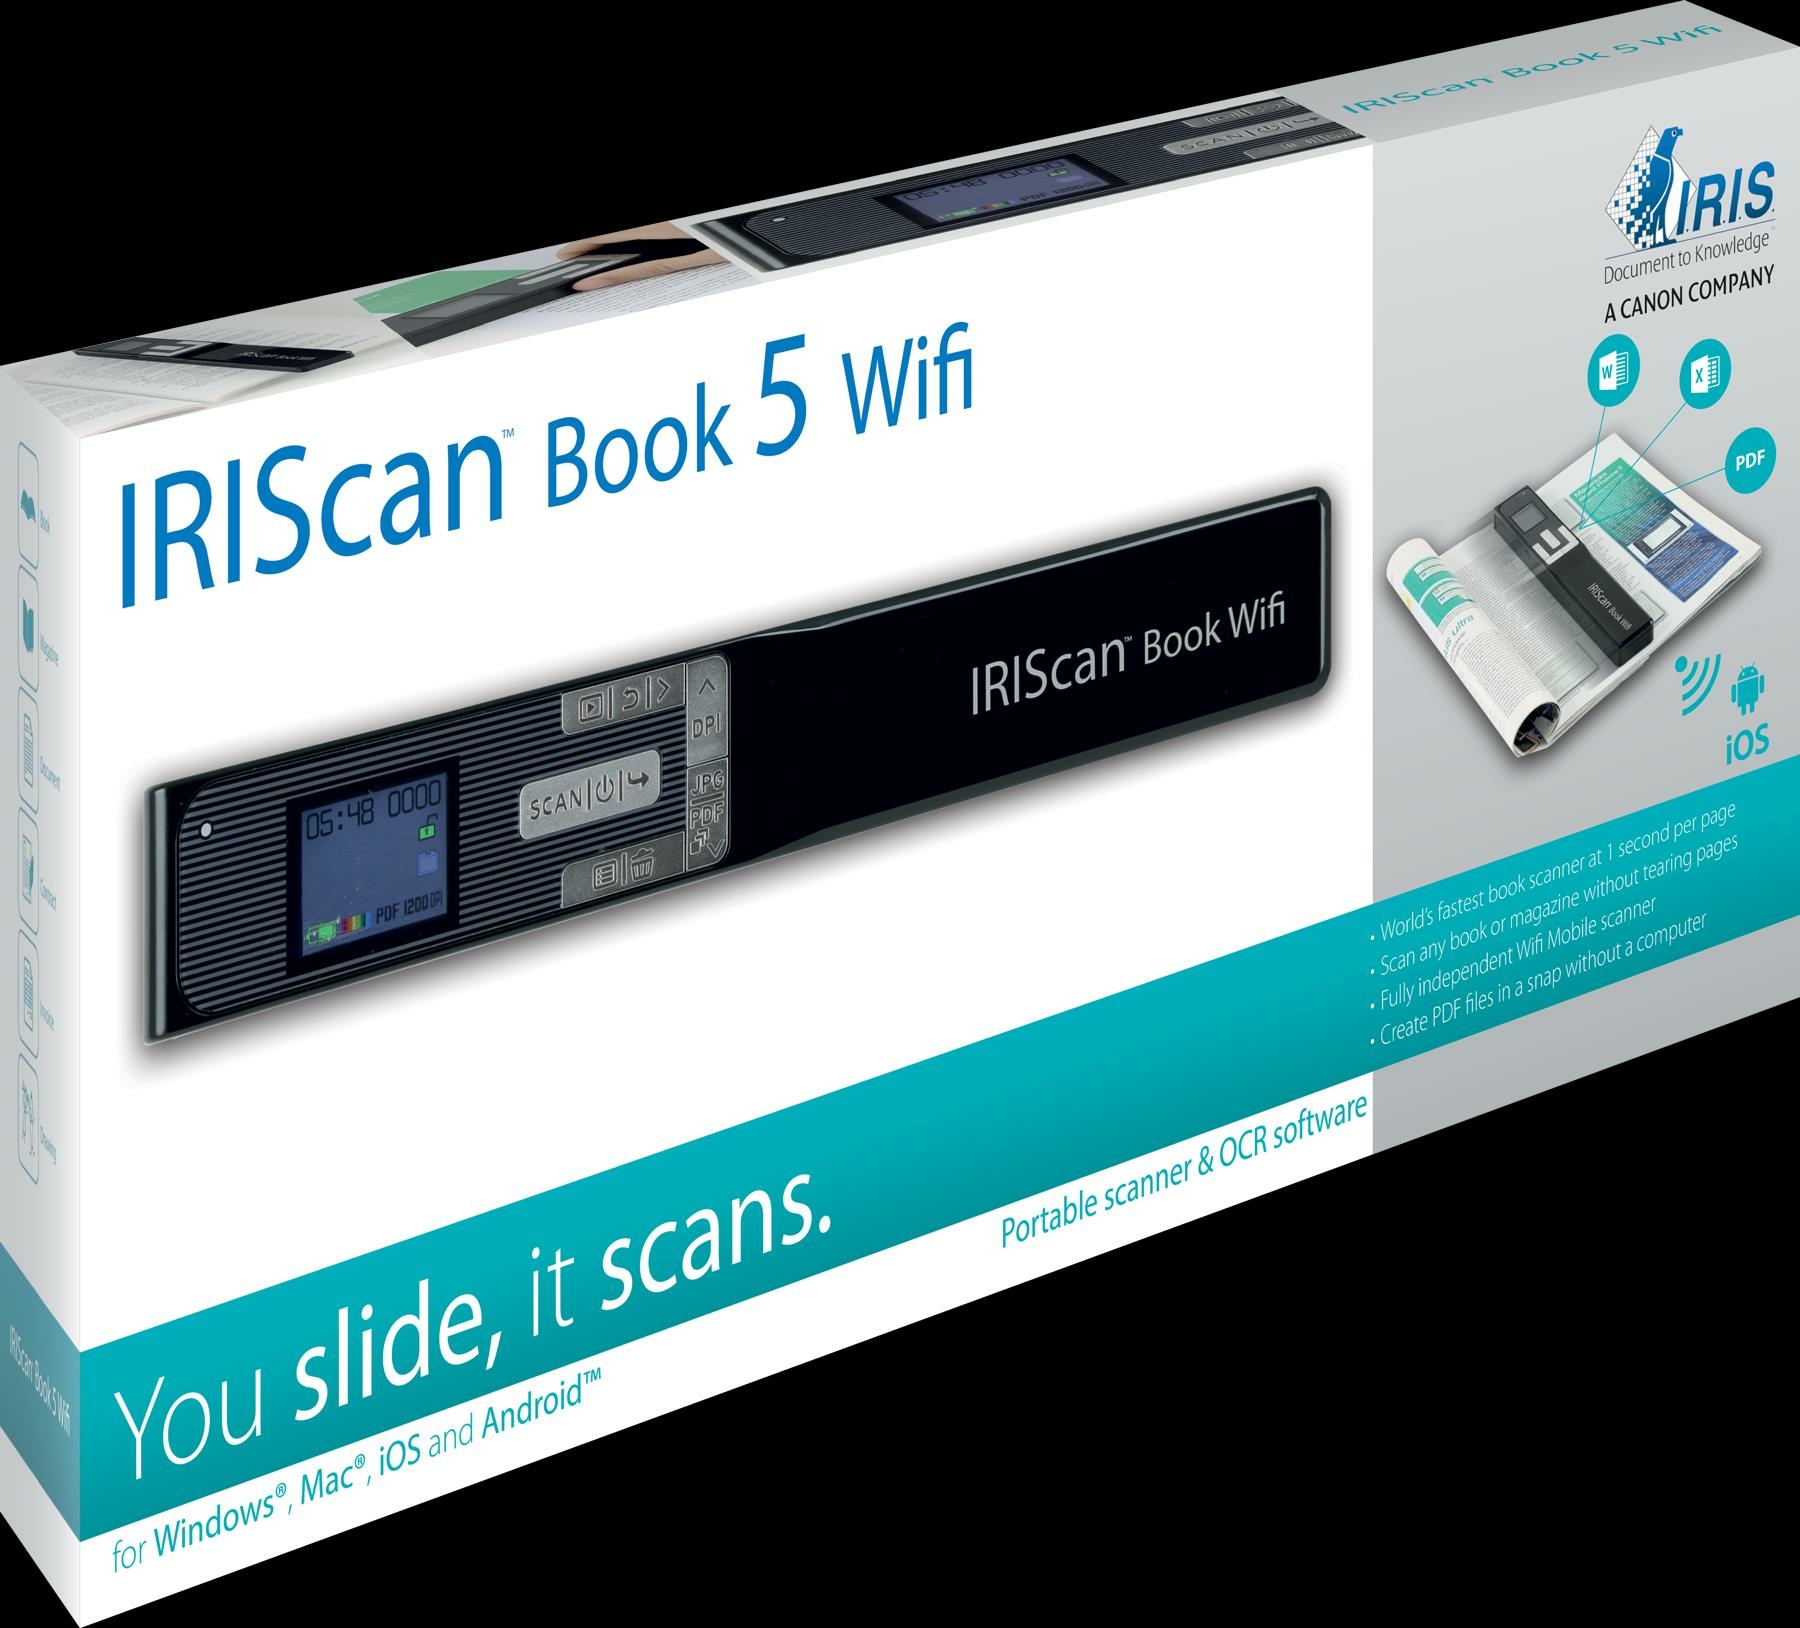 Iriscan book 5 scanner mobile wifi